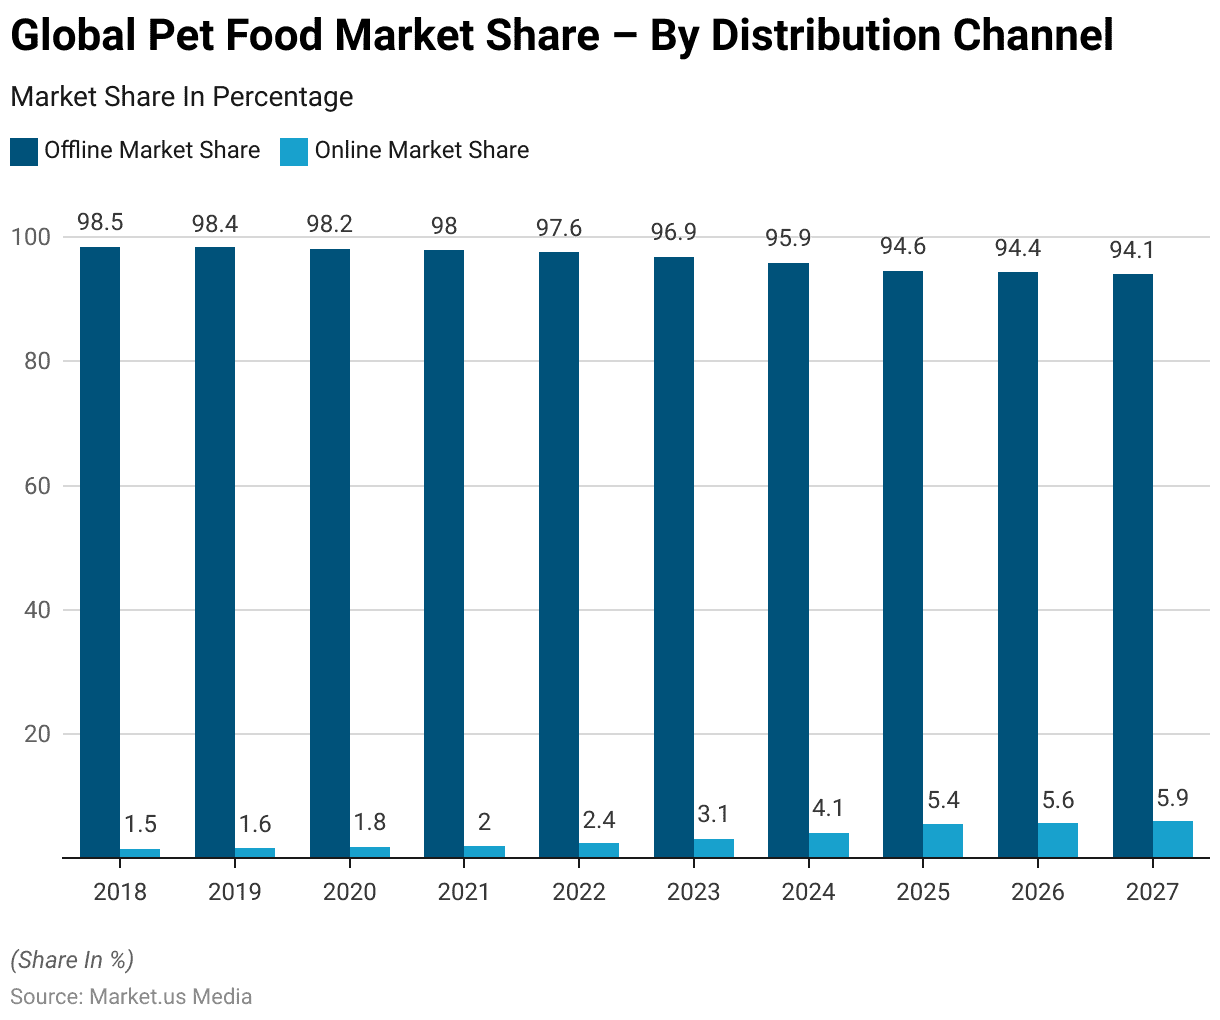 Pet Food Statistics